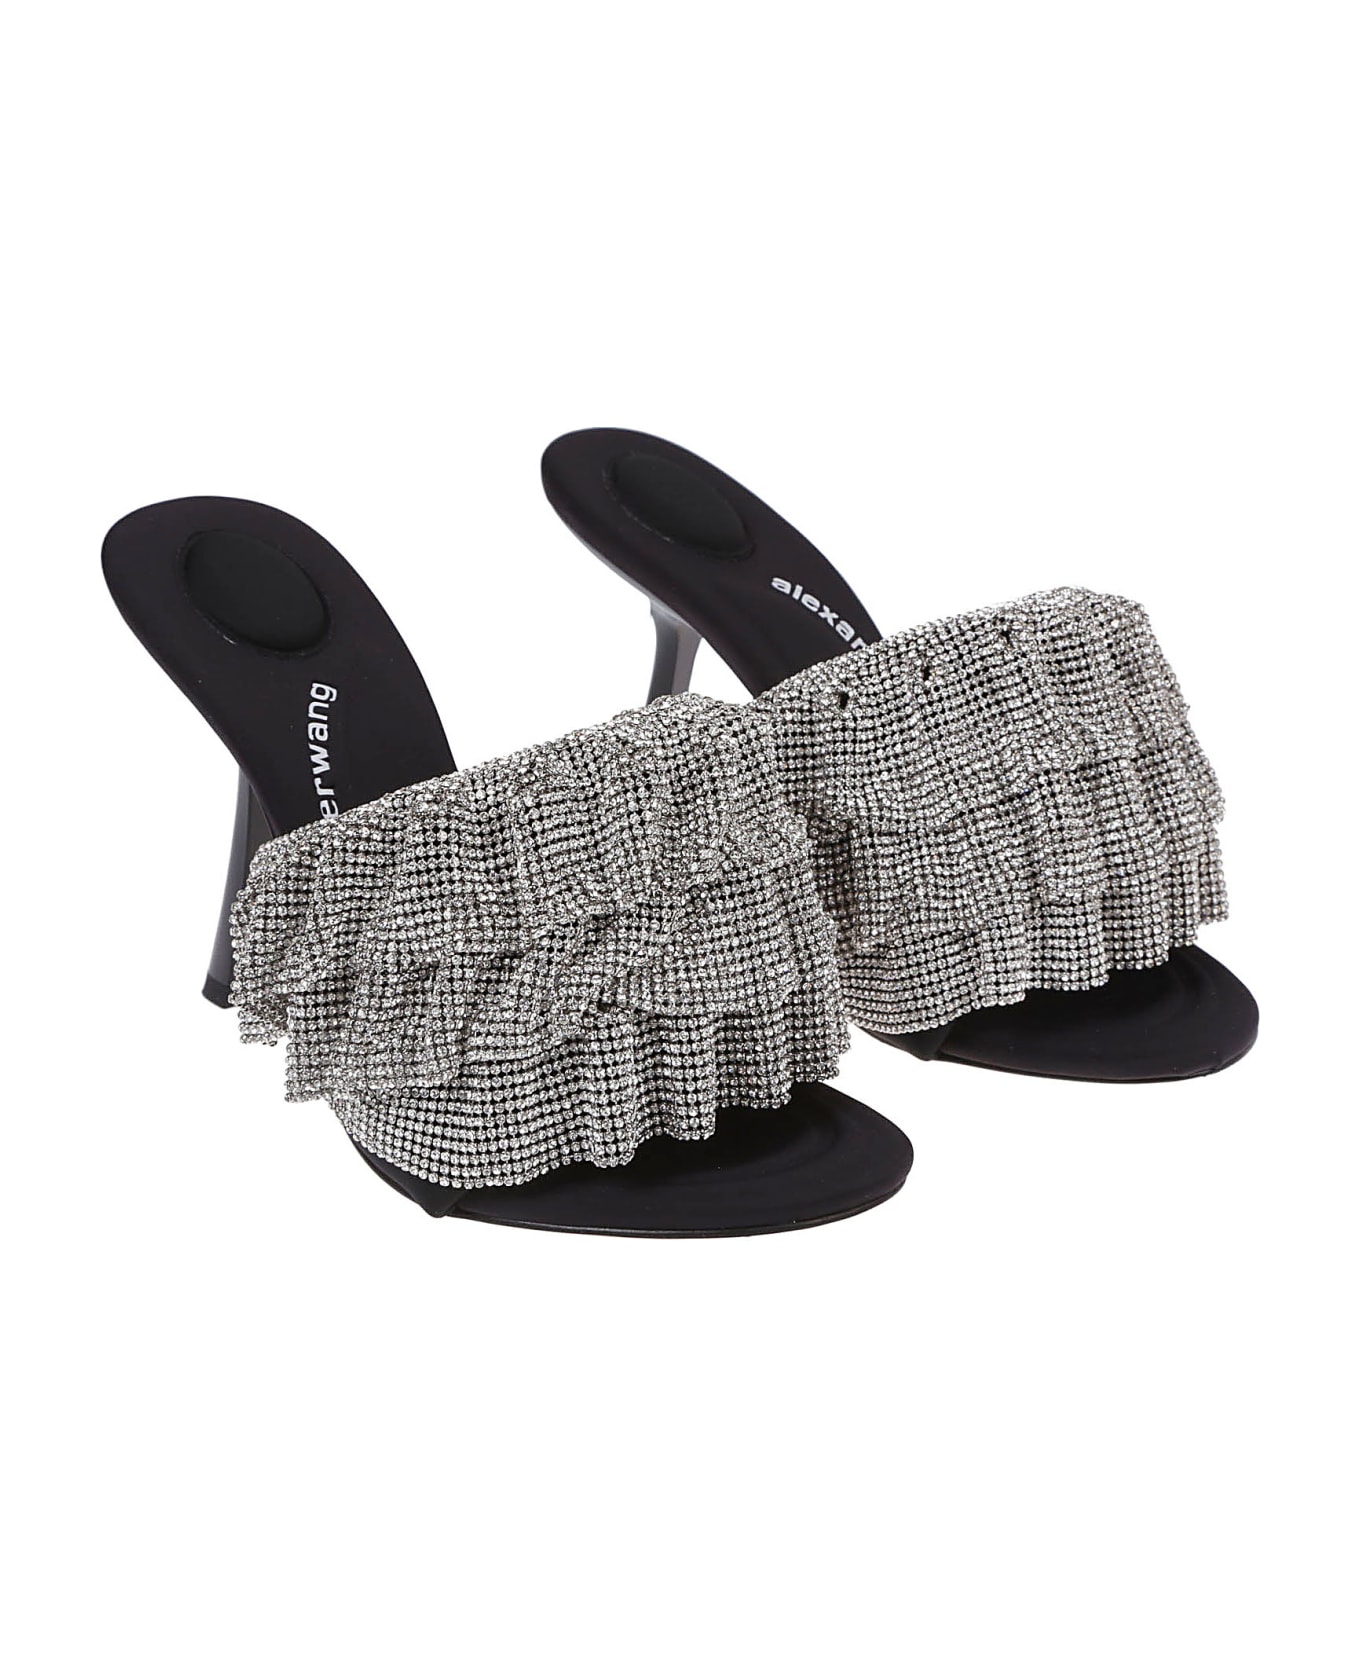 Alexander Wang Nala 105 Crystal Ruffle Sandals - Black